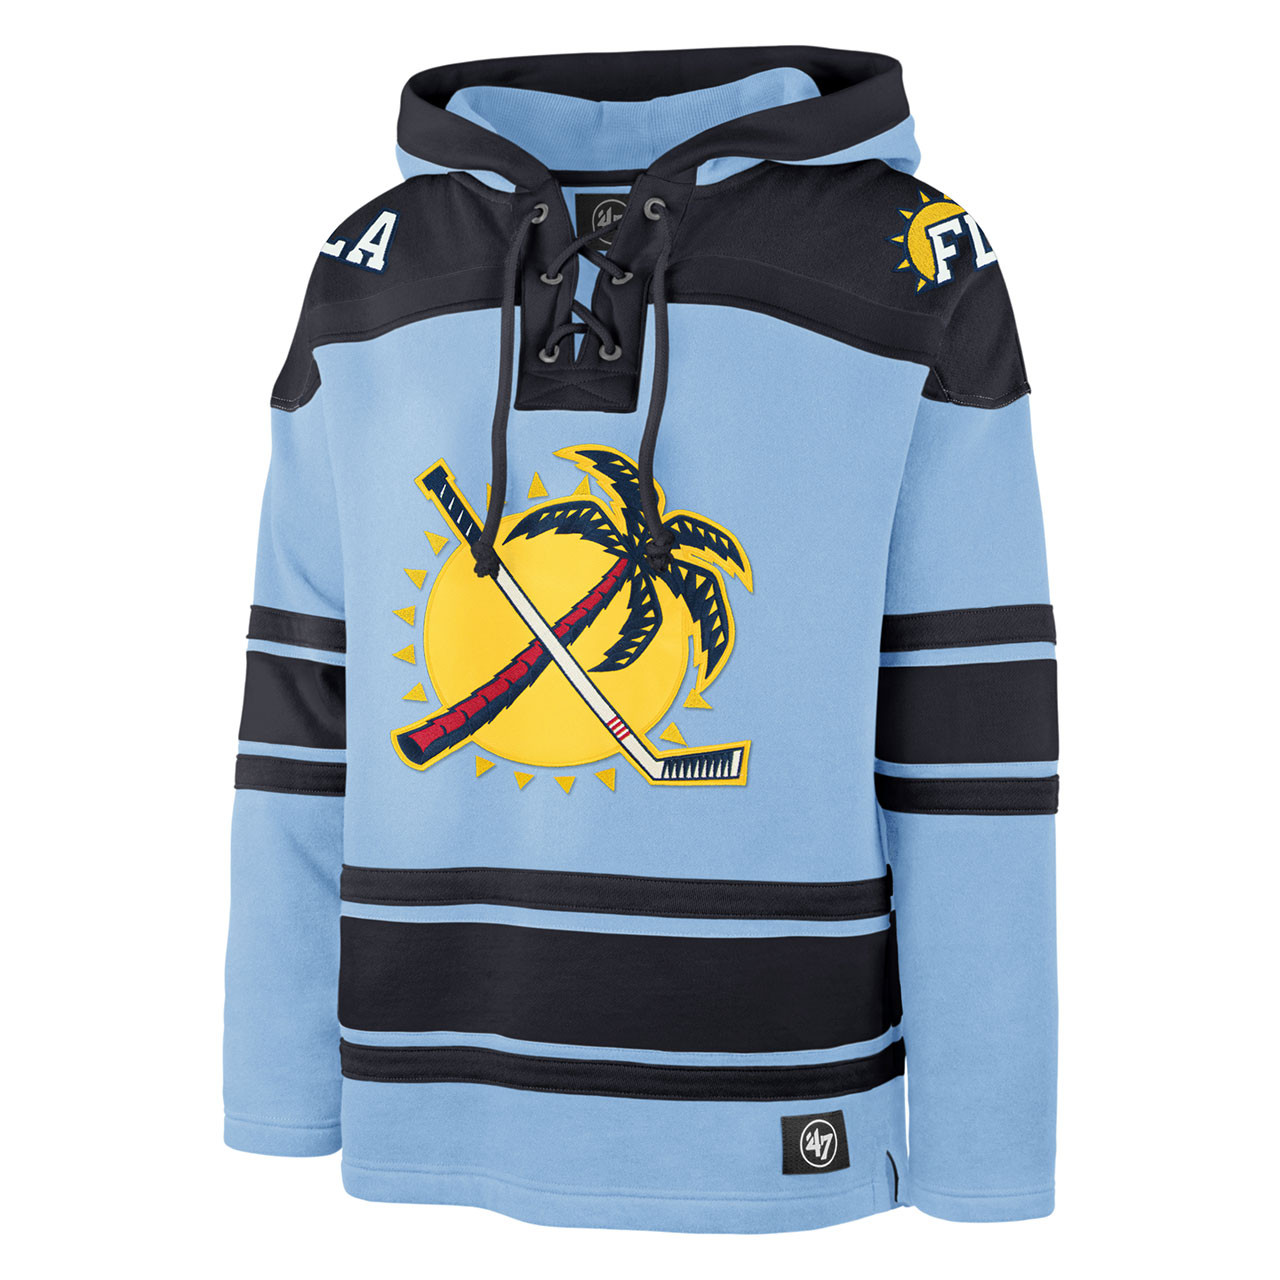 Flo.rida Panthers Sweatshirt Pan.thers Tee Hockey 